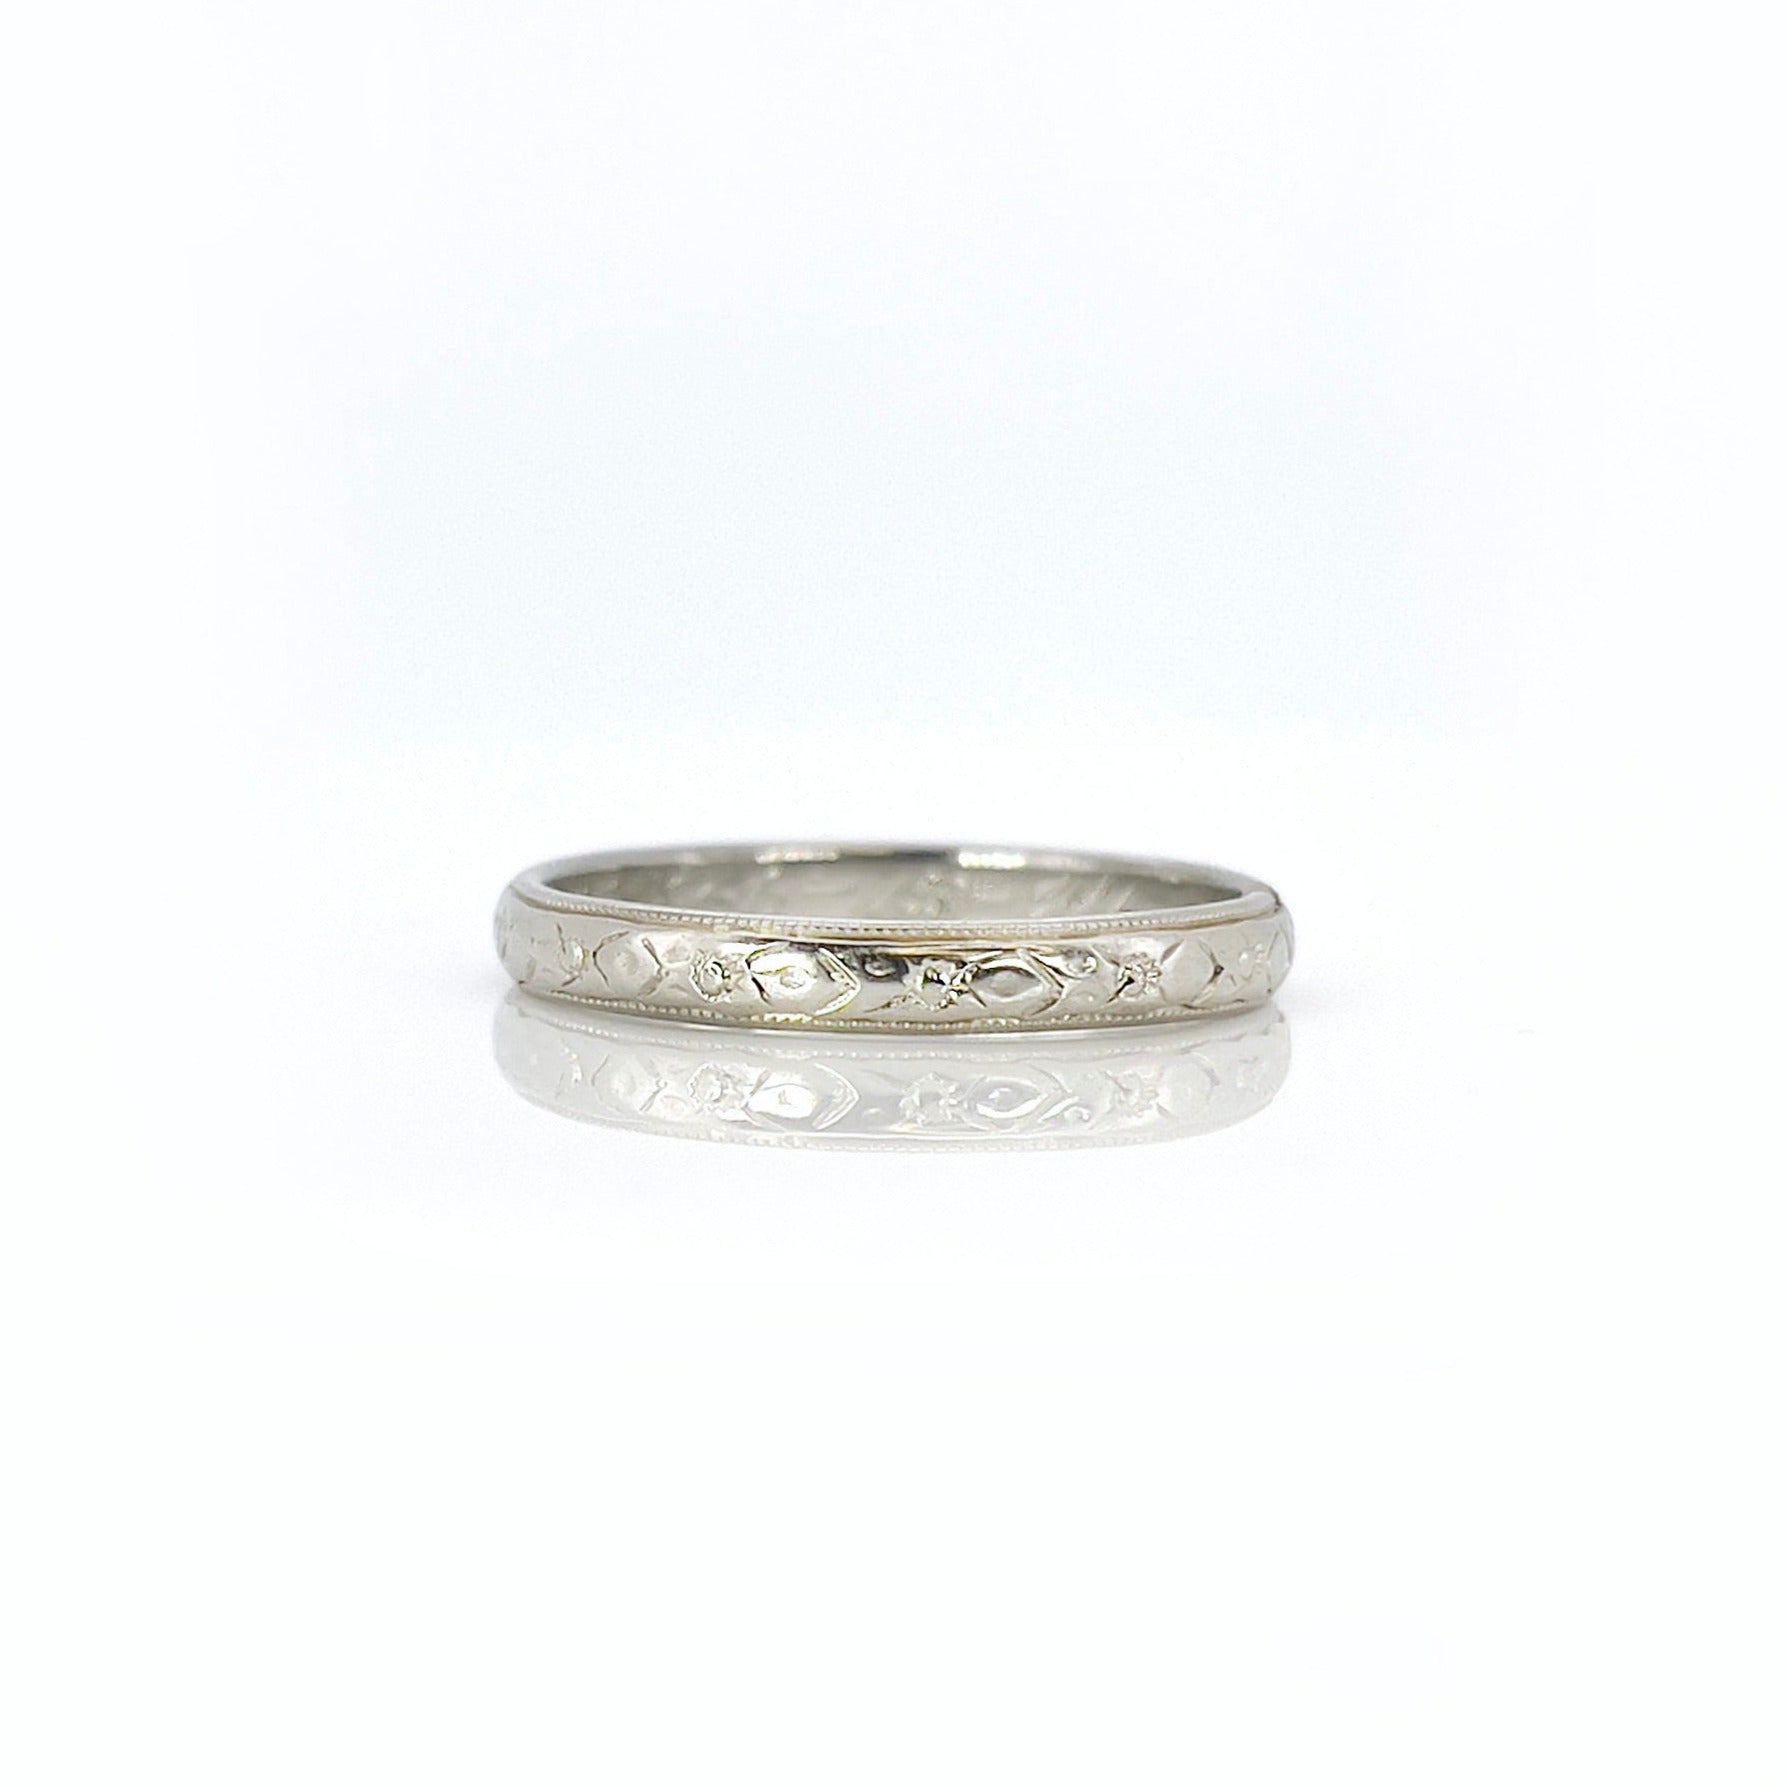 JR Wood & Son’s Wedding Ring, G.E. to E.K. 6-15-24, 18K, Size 8.75